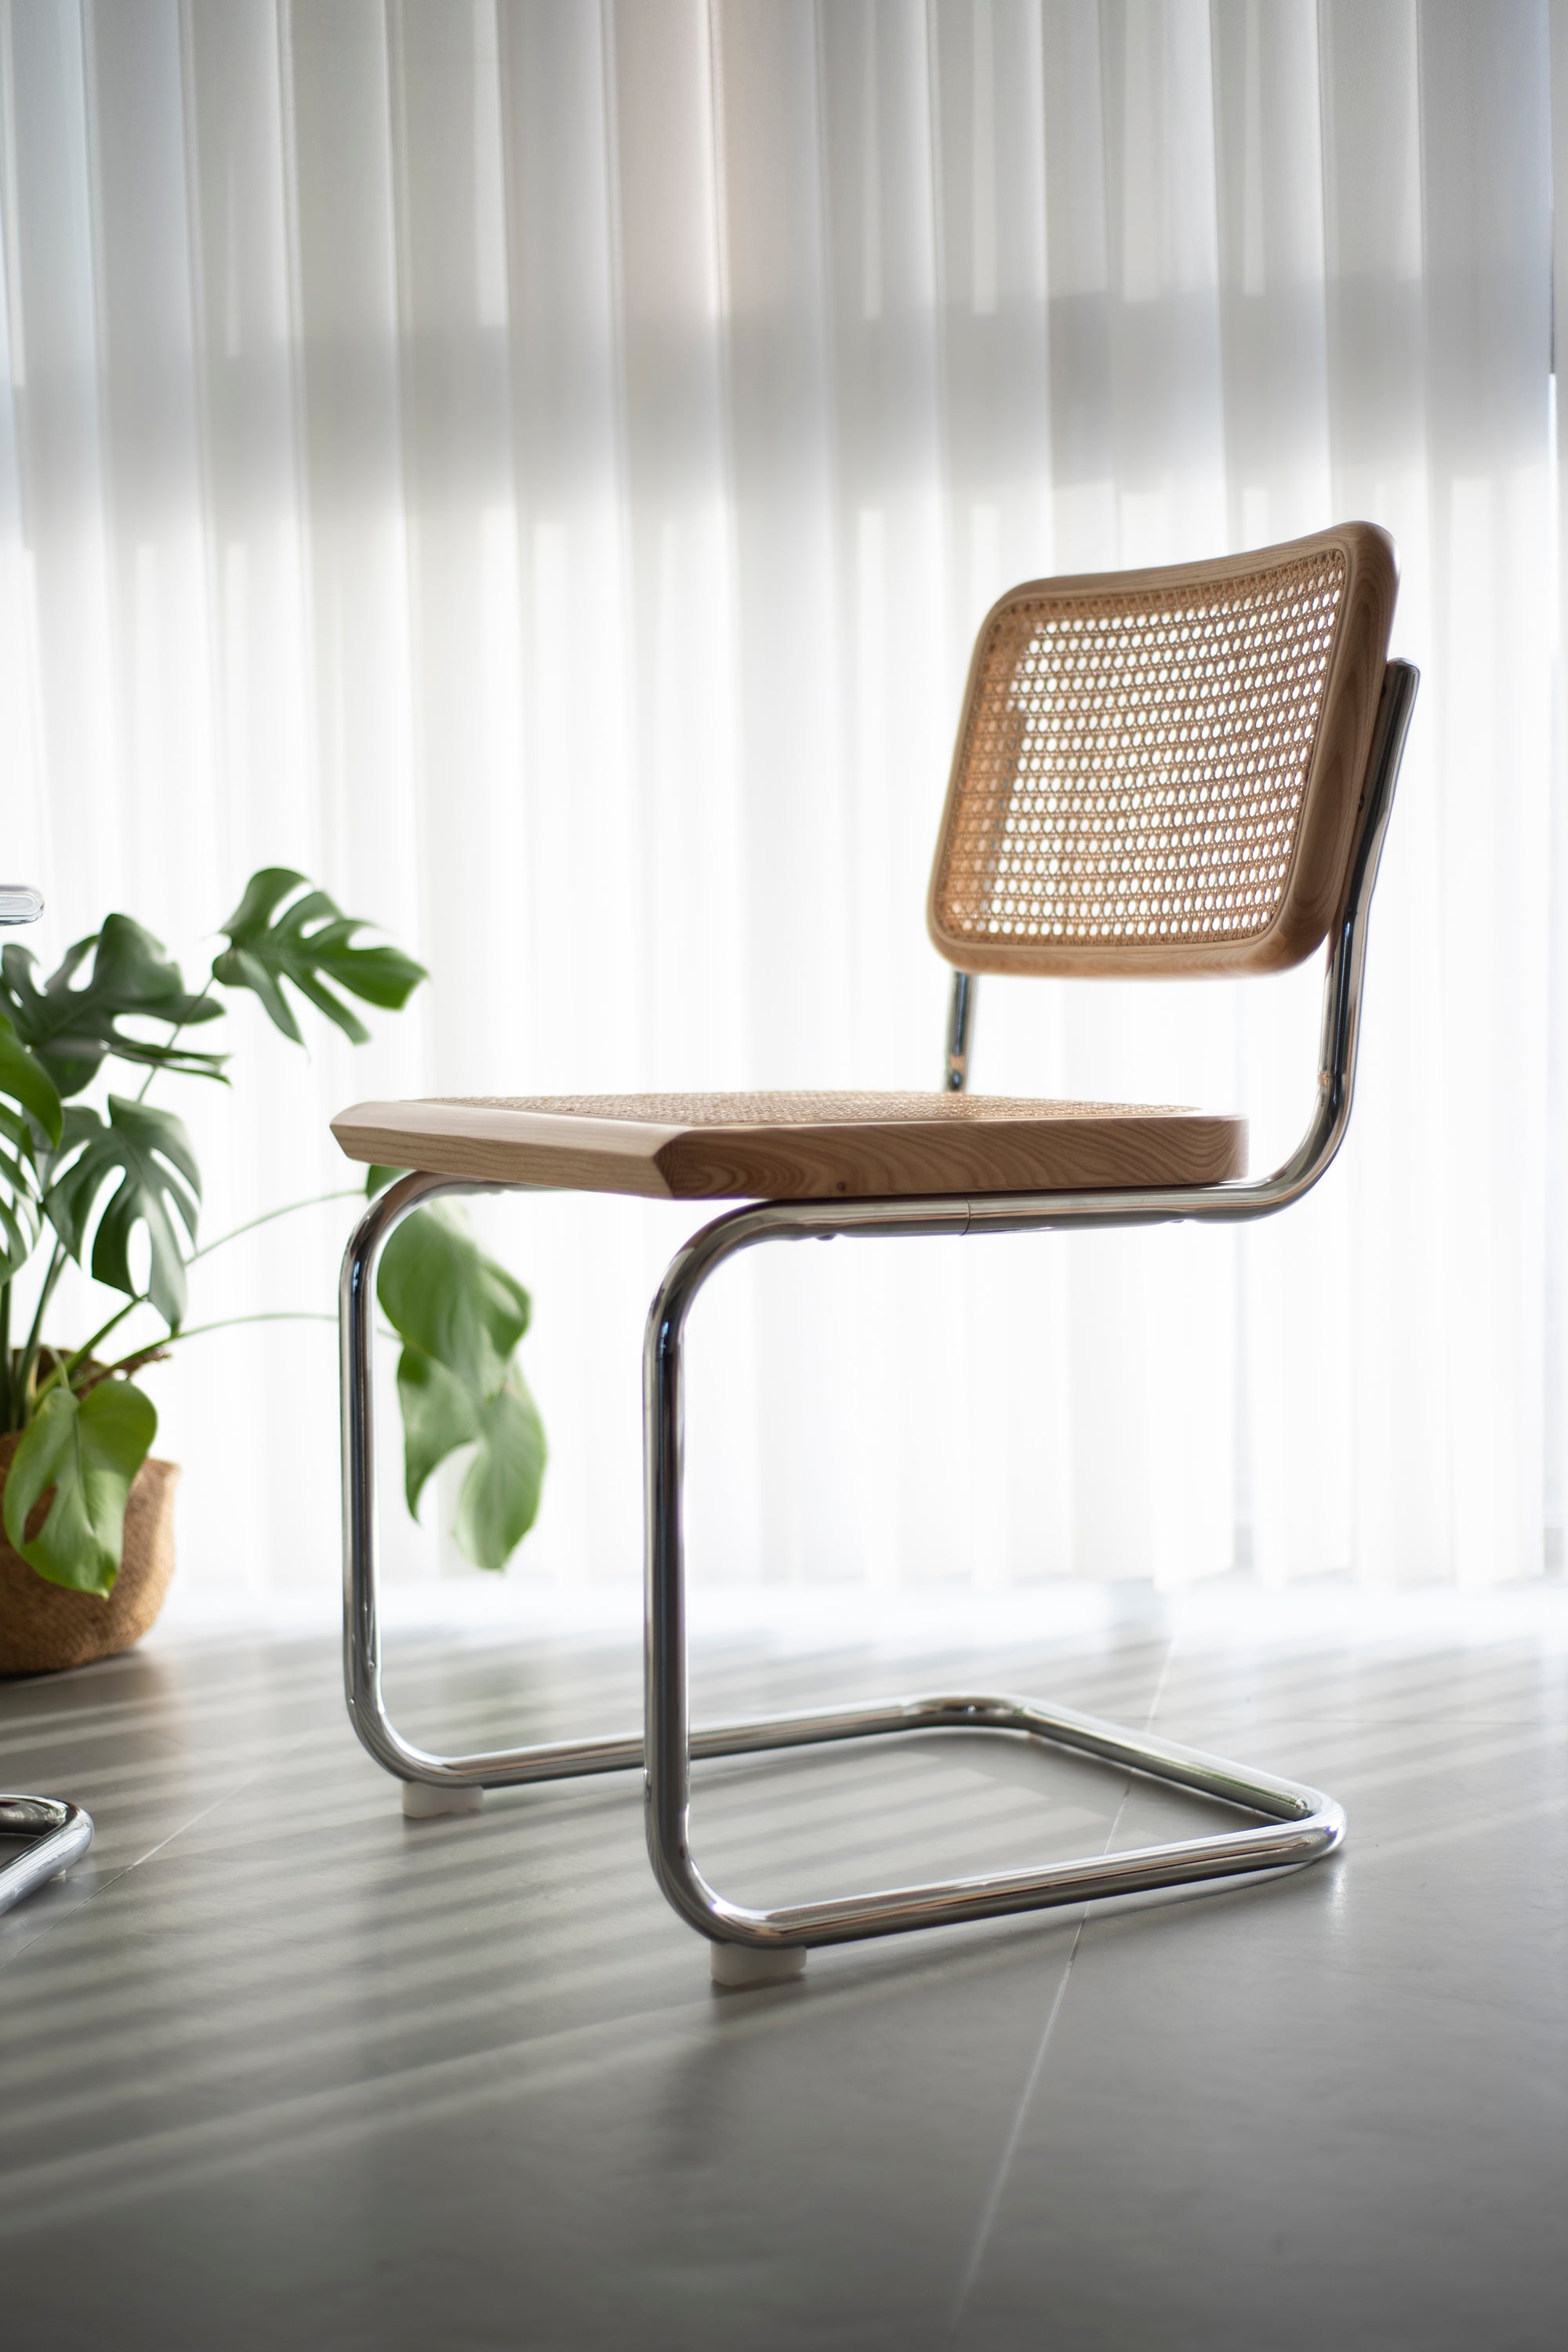 Marcel Breuer Cesca Cane Chair for Mid-century Modern homedecor photography by carloscasa Customer